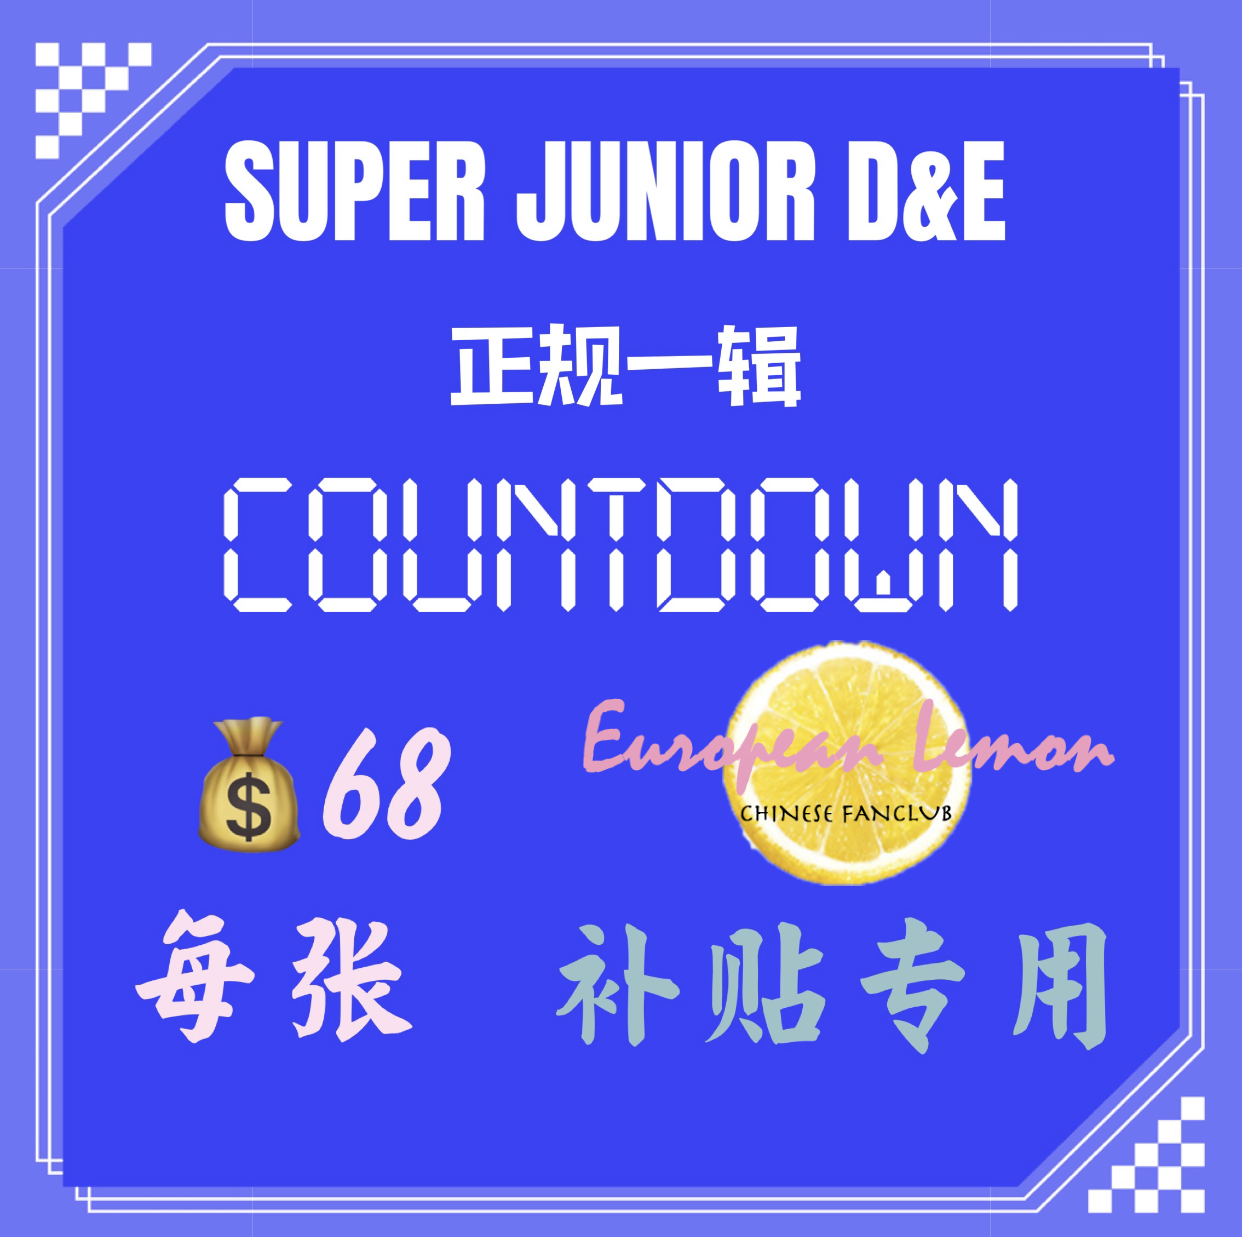 [全款 限量3070张 补贴专] Super Junior : D&E - Album Vol.1 [COUNTDOWN] _欧柠 EuropeanLemon